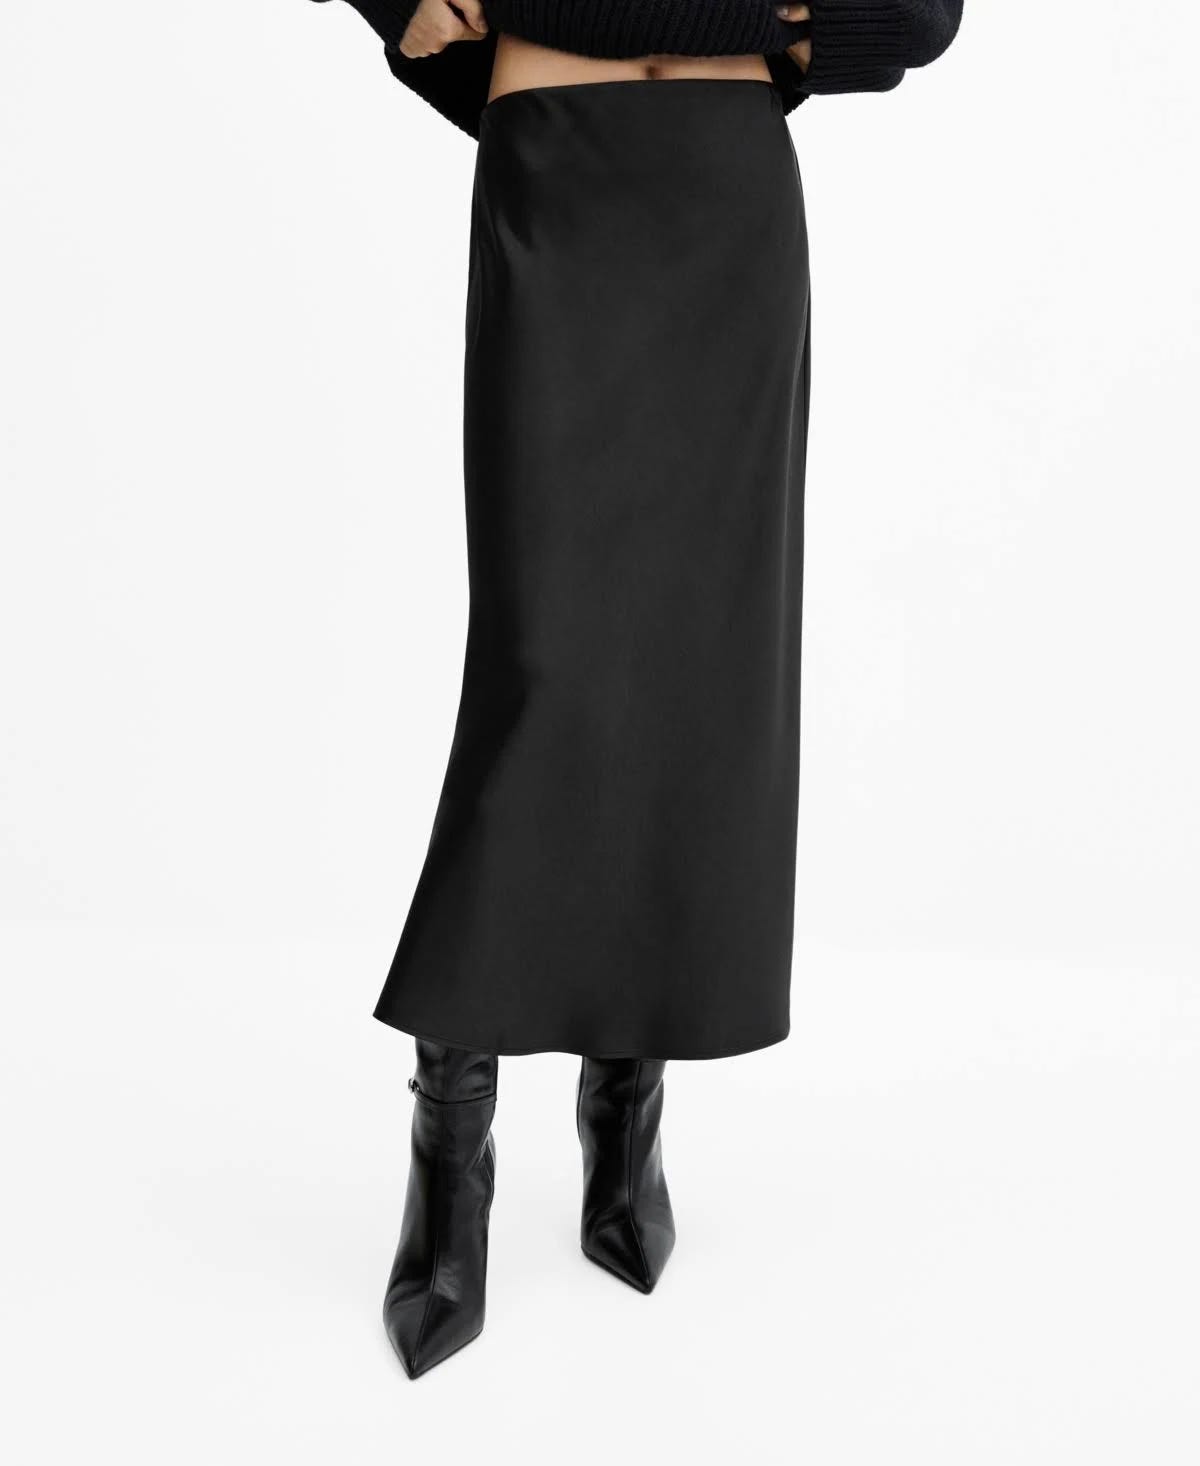 Mango Black Satin Midi Skirt for Women - Stylish Party Attire | Image